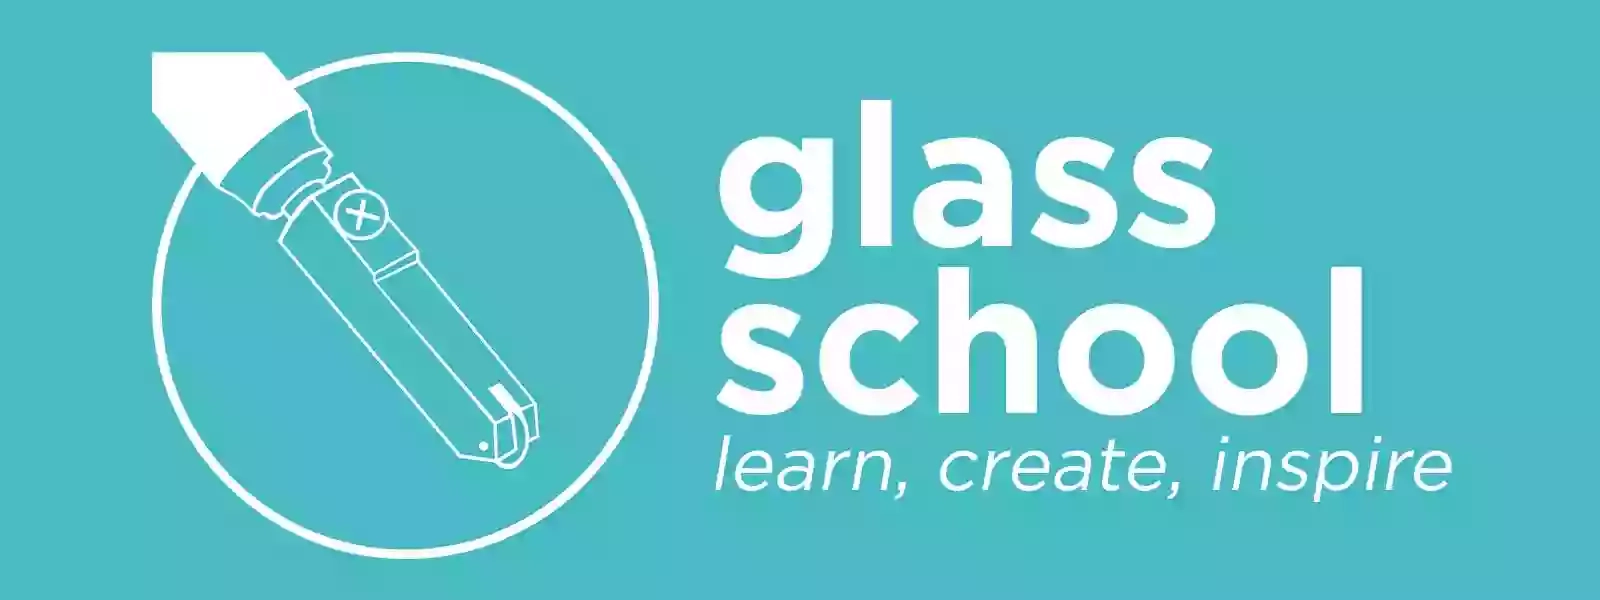 Glass School